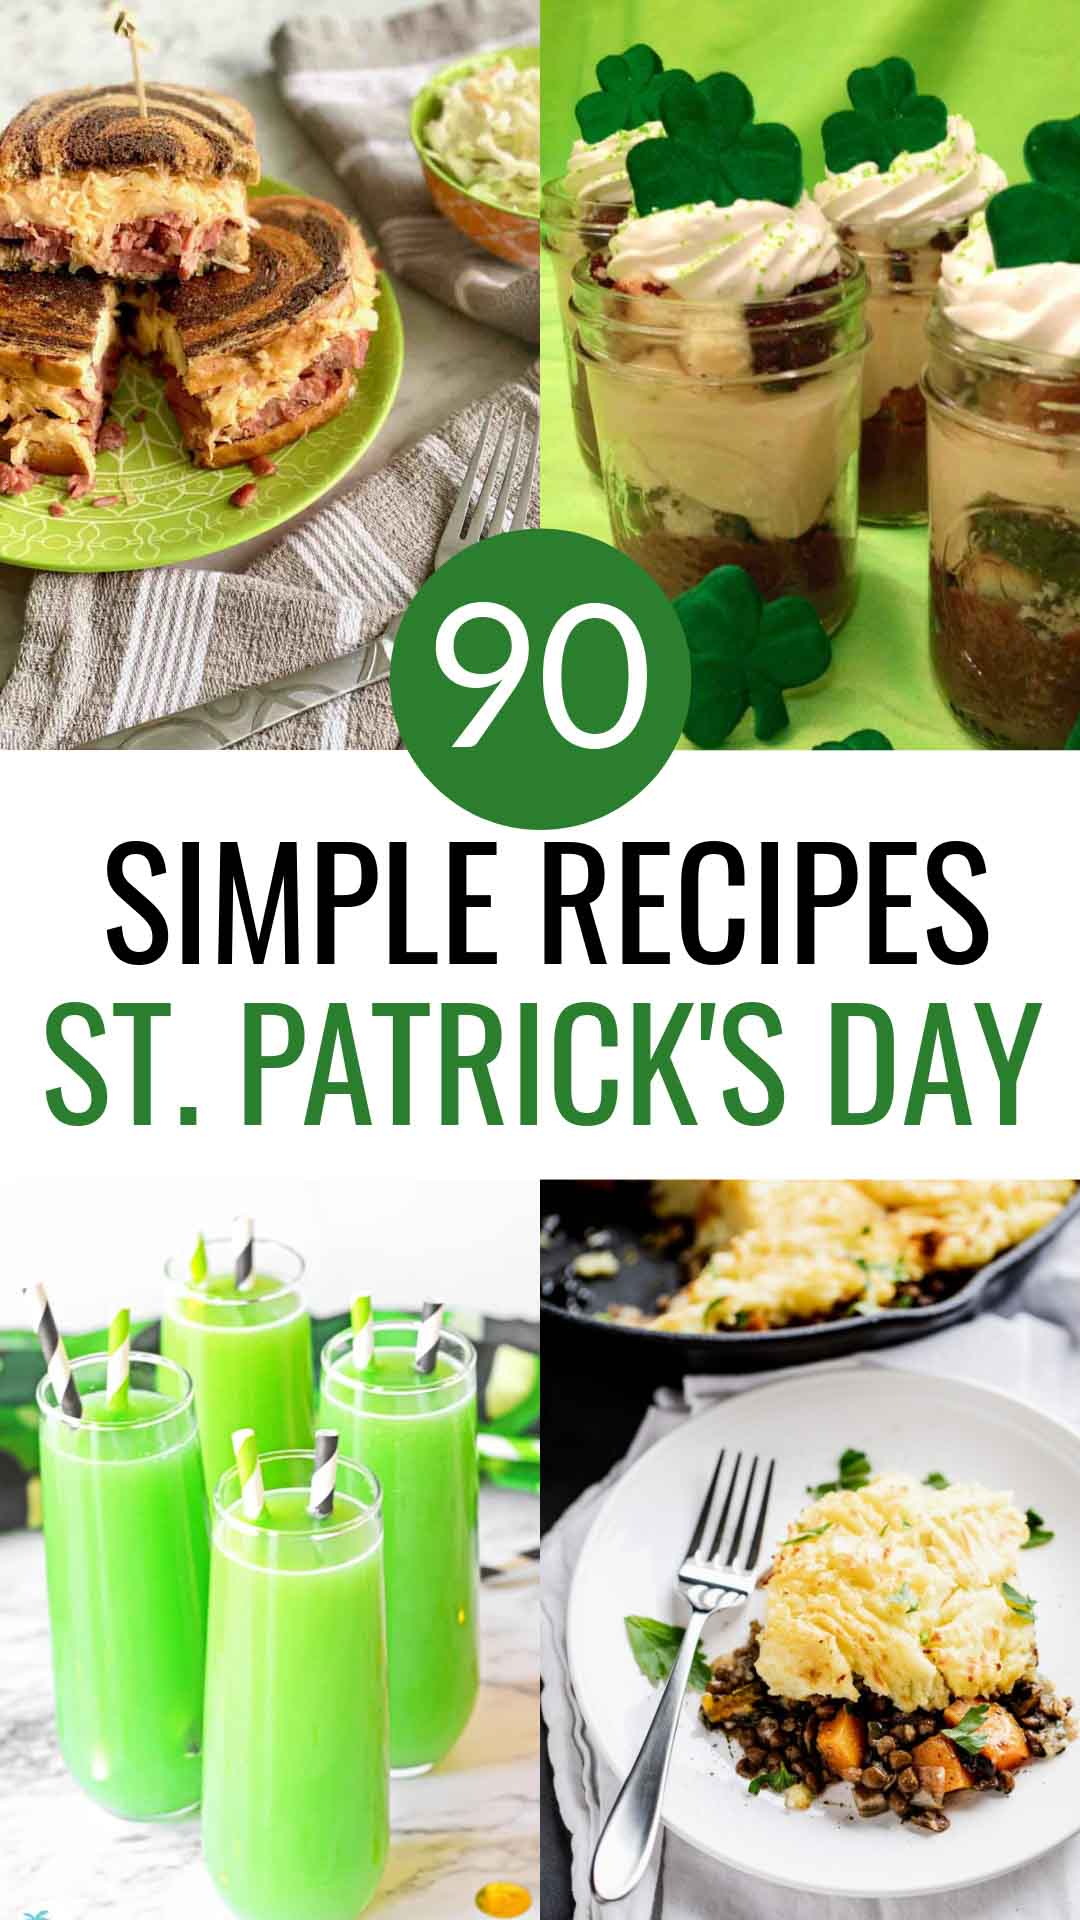 90 Simple Recipes for St. Patrick's Day featuring corned beef Reuben sandwiches, Irish cream parfait desserts, vegetarian lentil shepherd's pie, and green mimosas